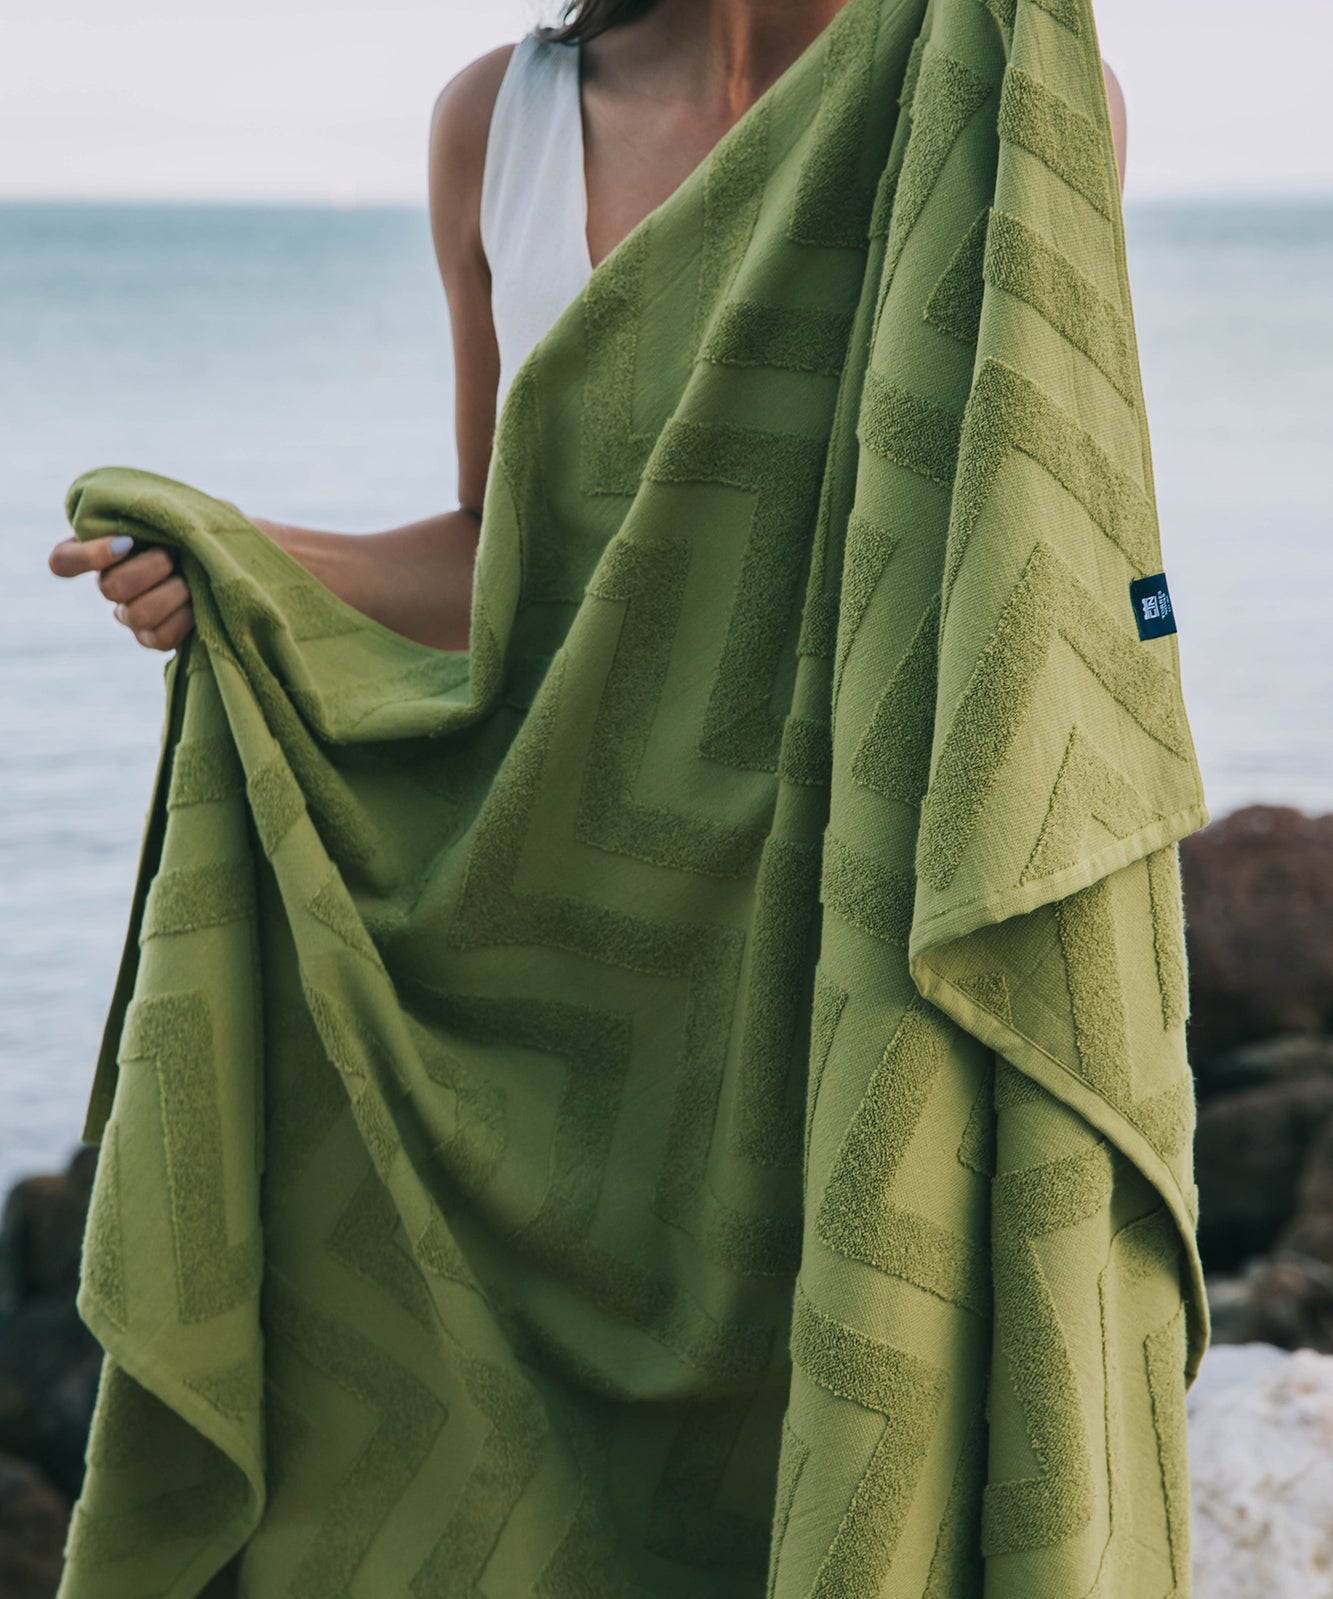 Olive drab Mar Picado beach towel - Torres Novas